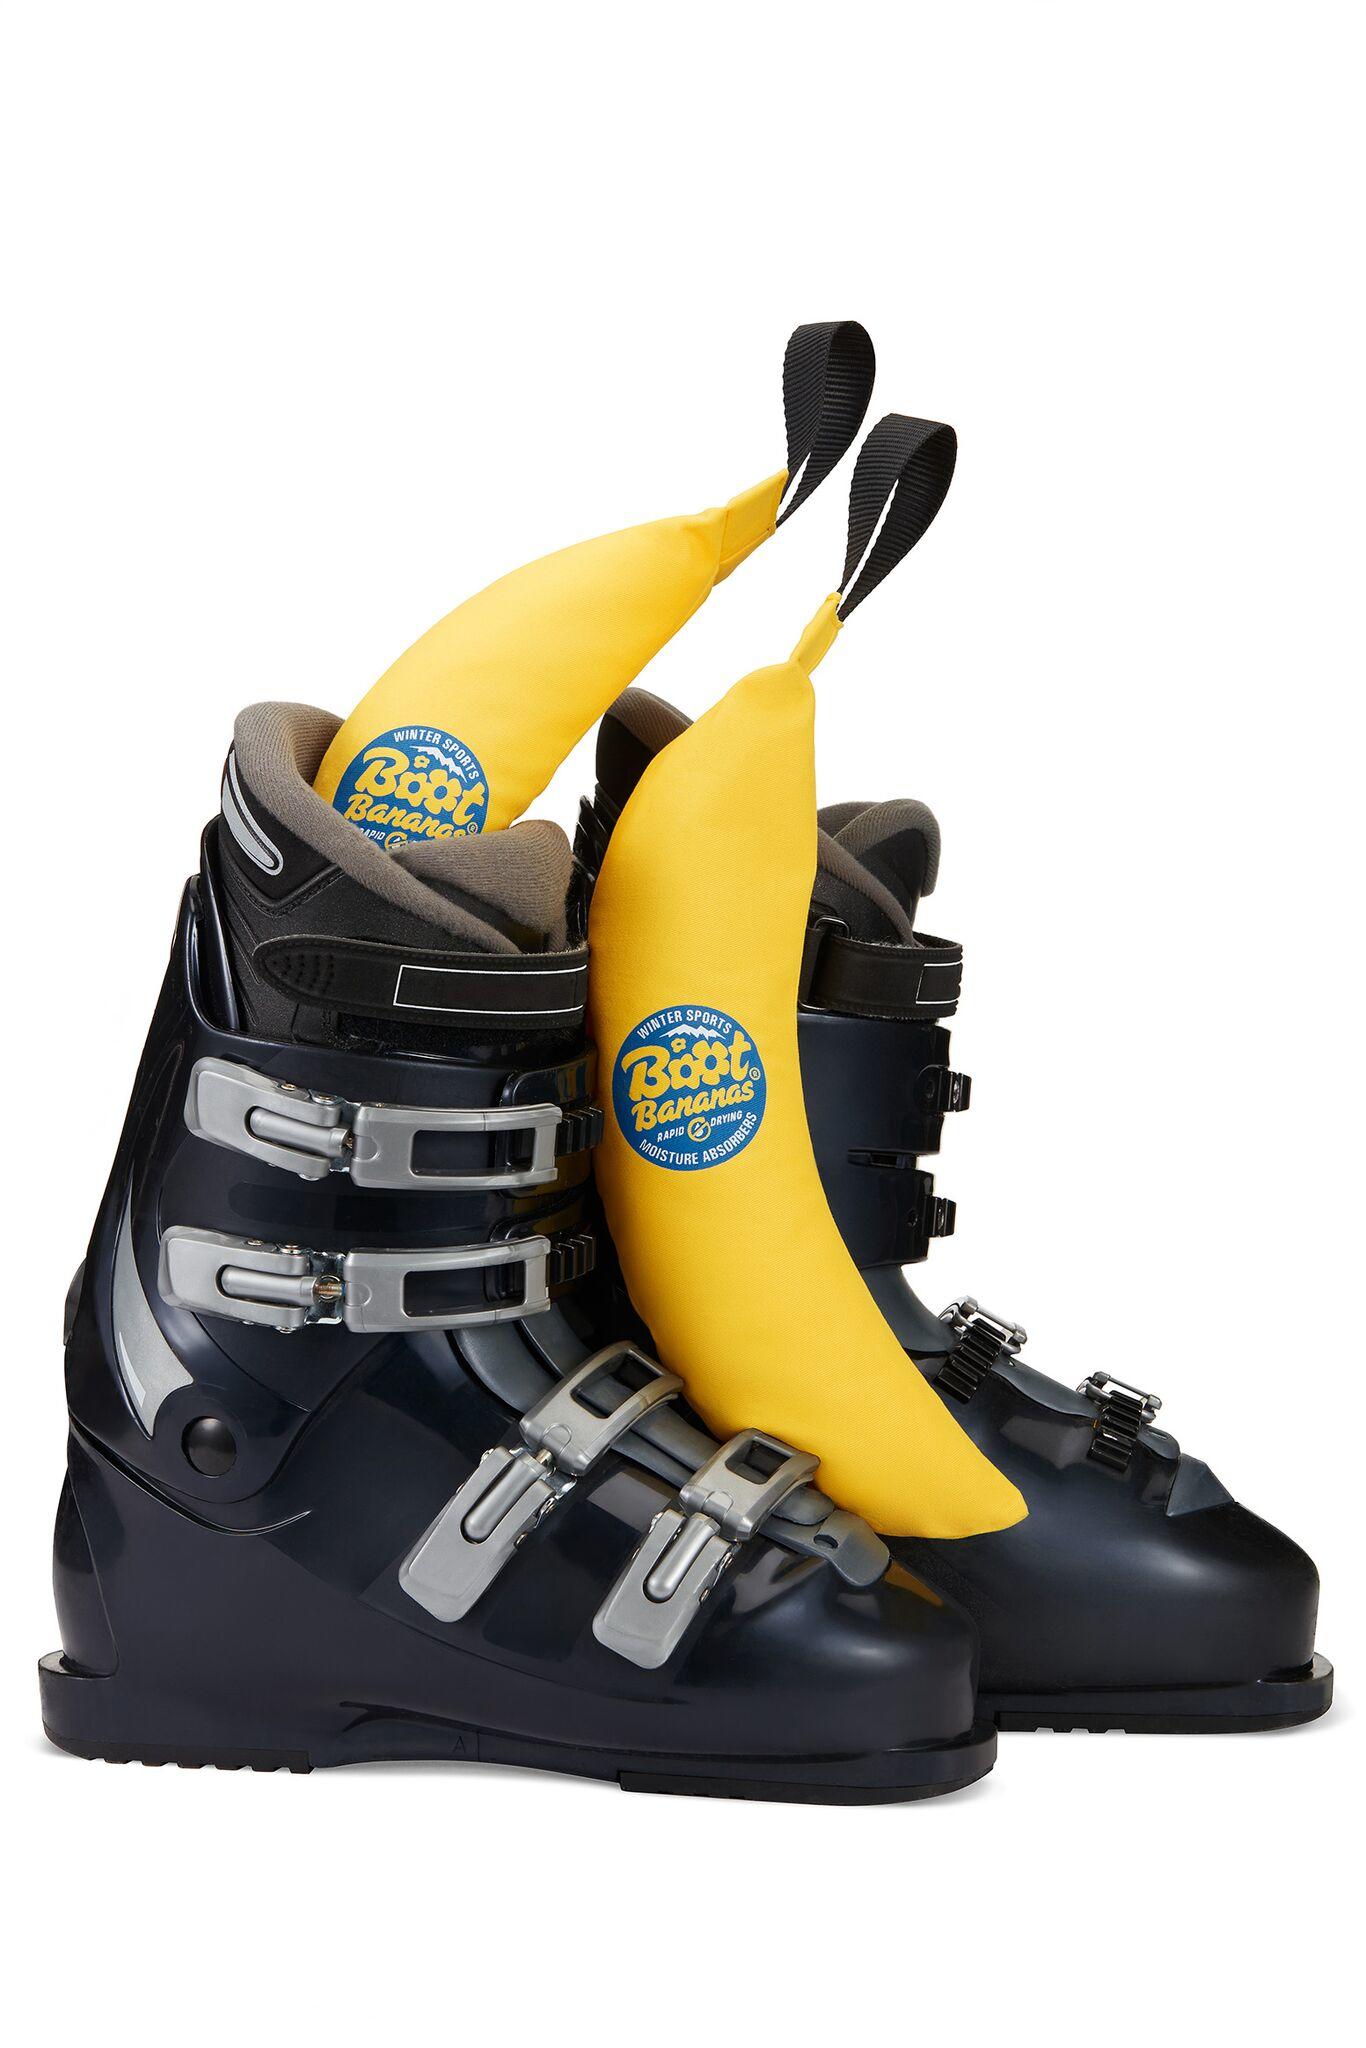 Boot Bananas Winter Sports